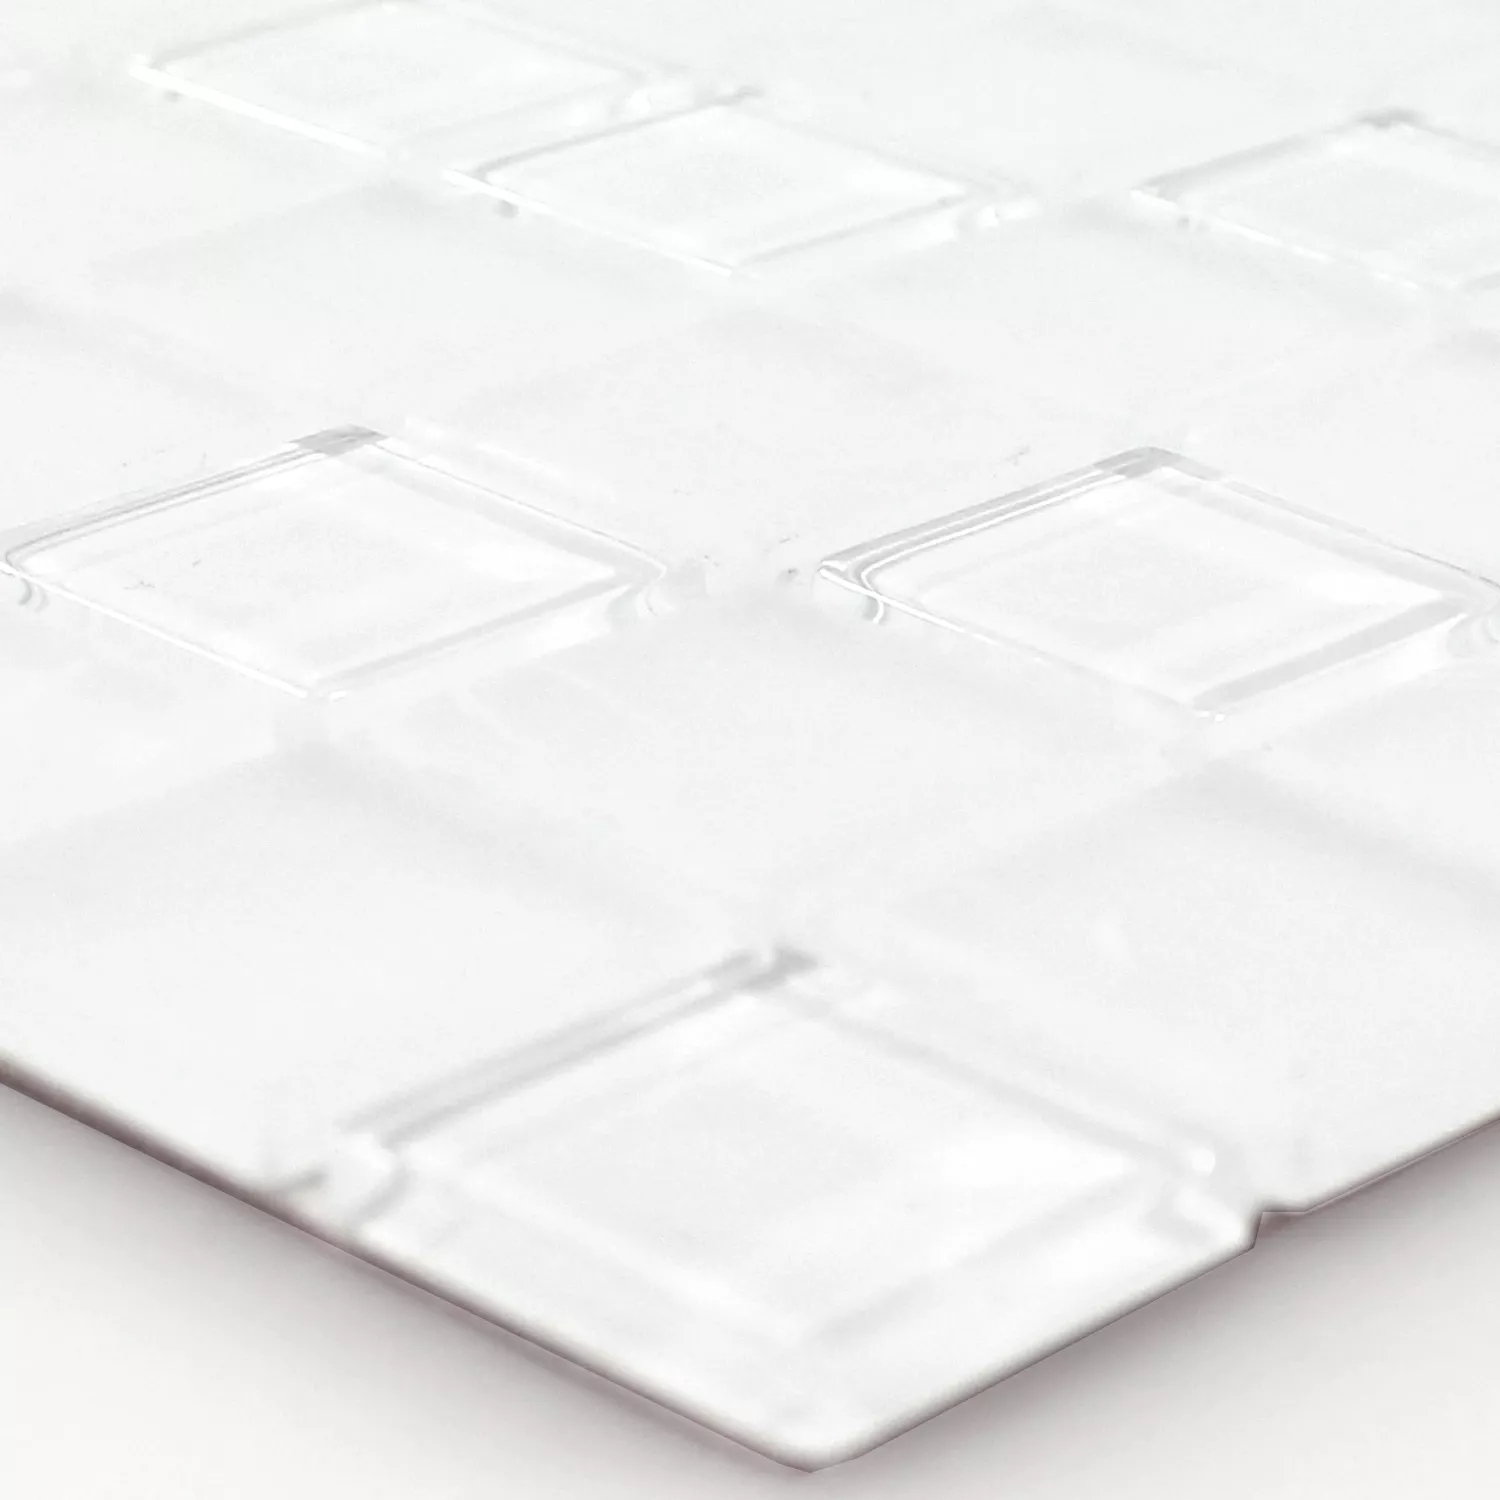 Mosaic Tiles Glass Self Adhesive White